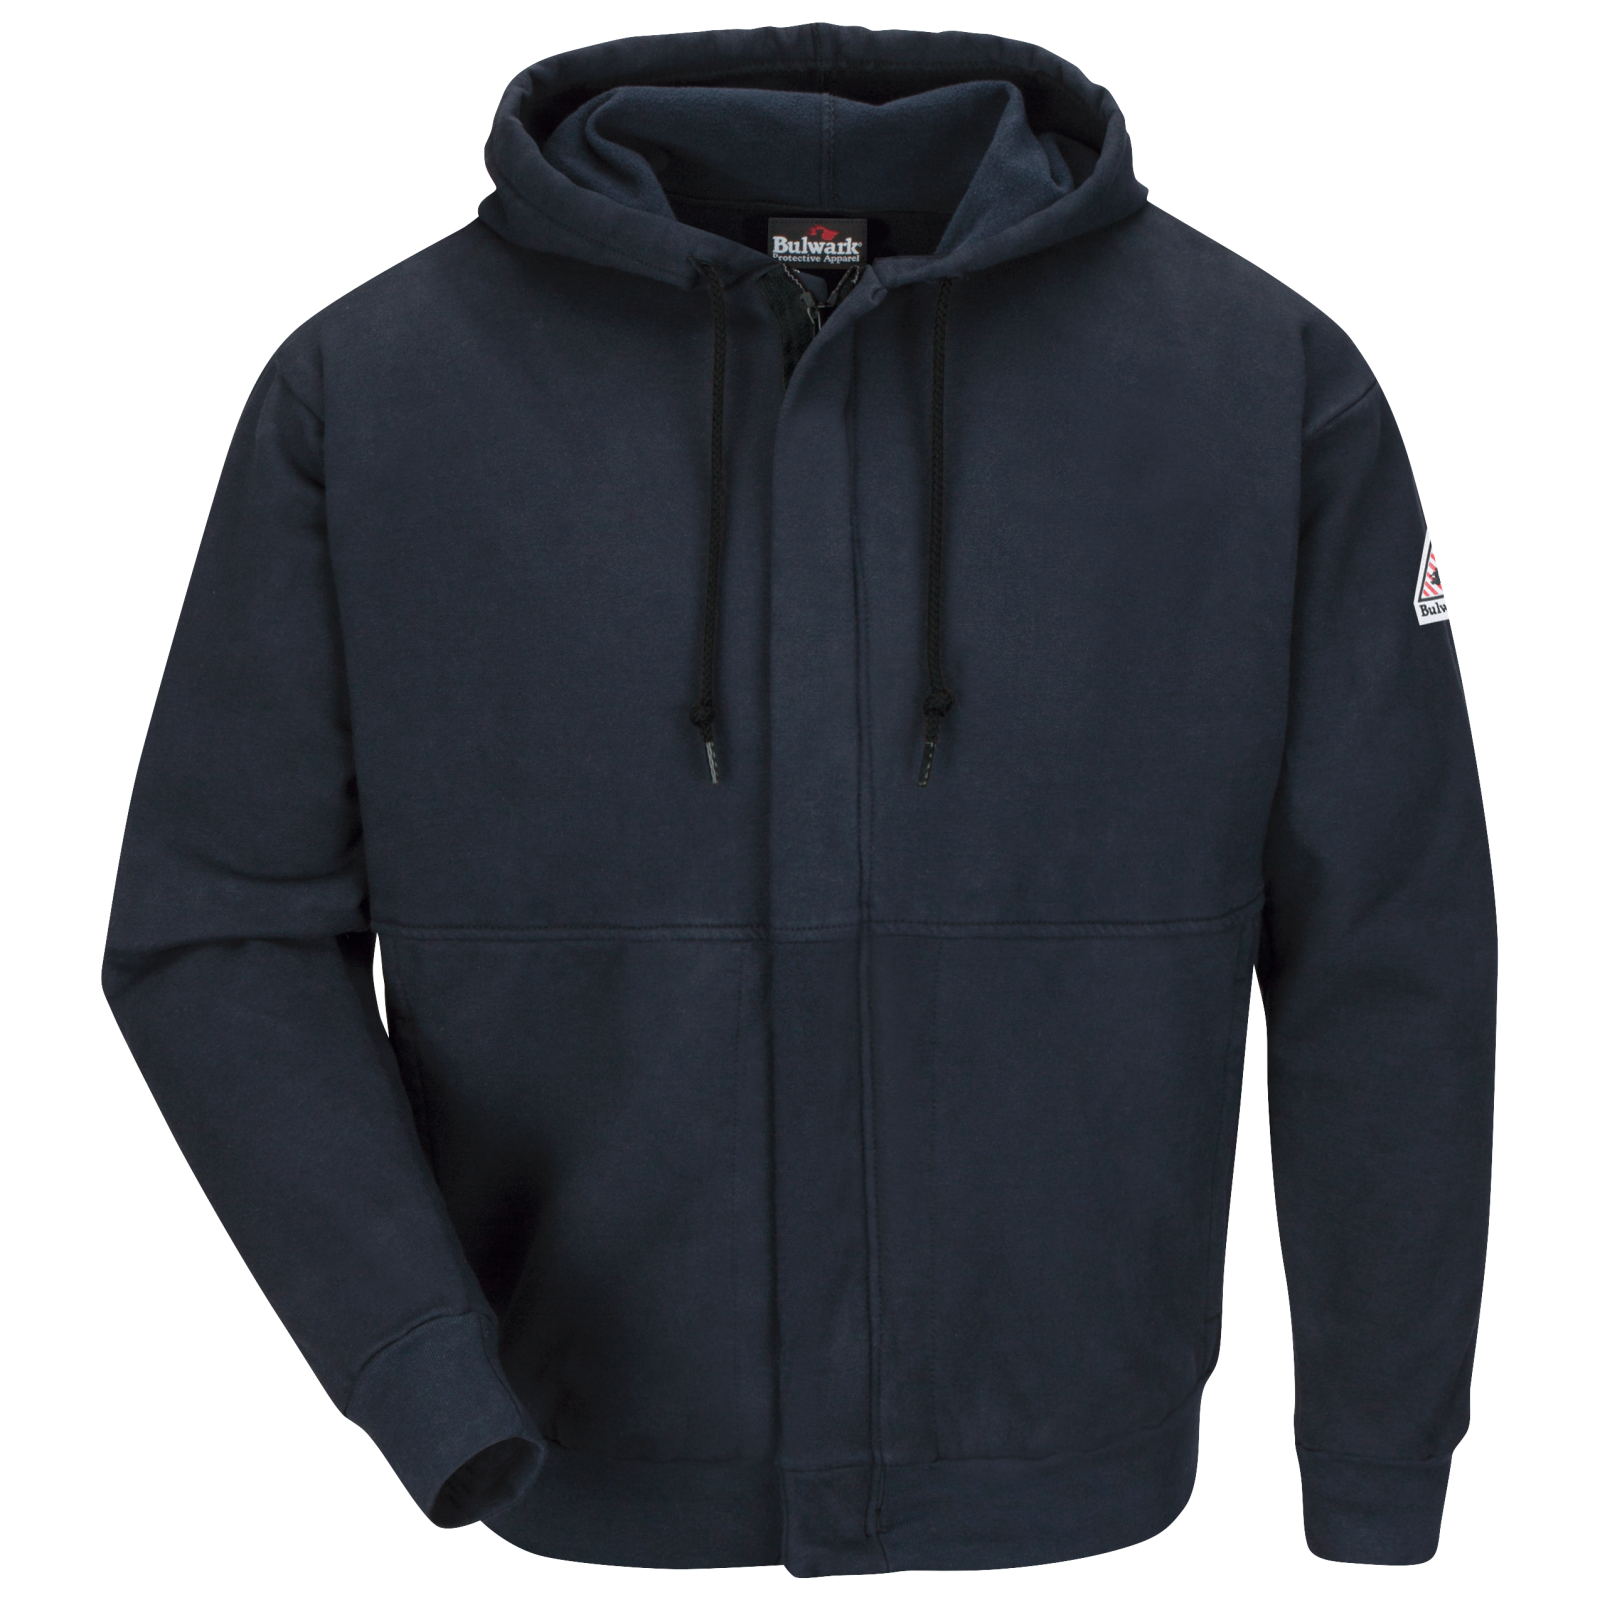 Bulwark Men's Fleece Navy Fire-Resistant Pullover Hooded Sweatshirt from GME Supply